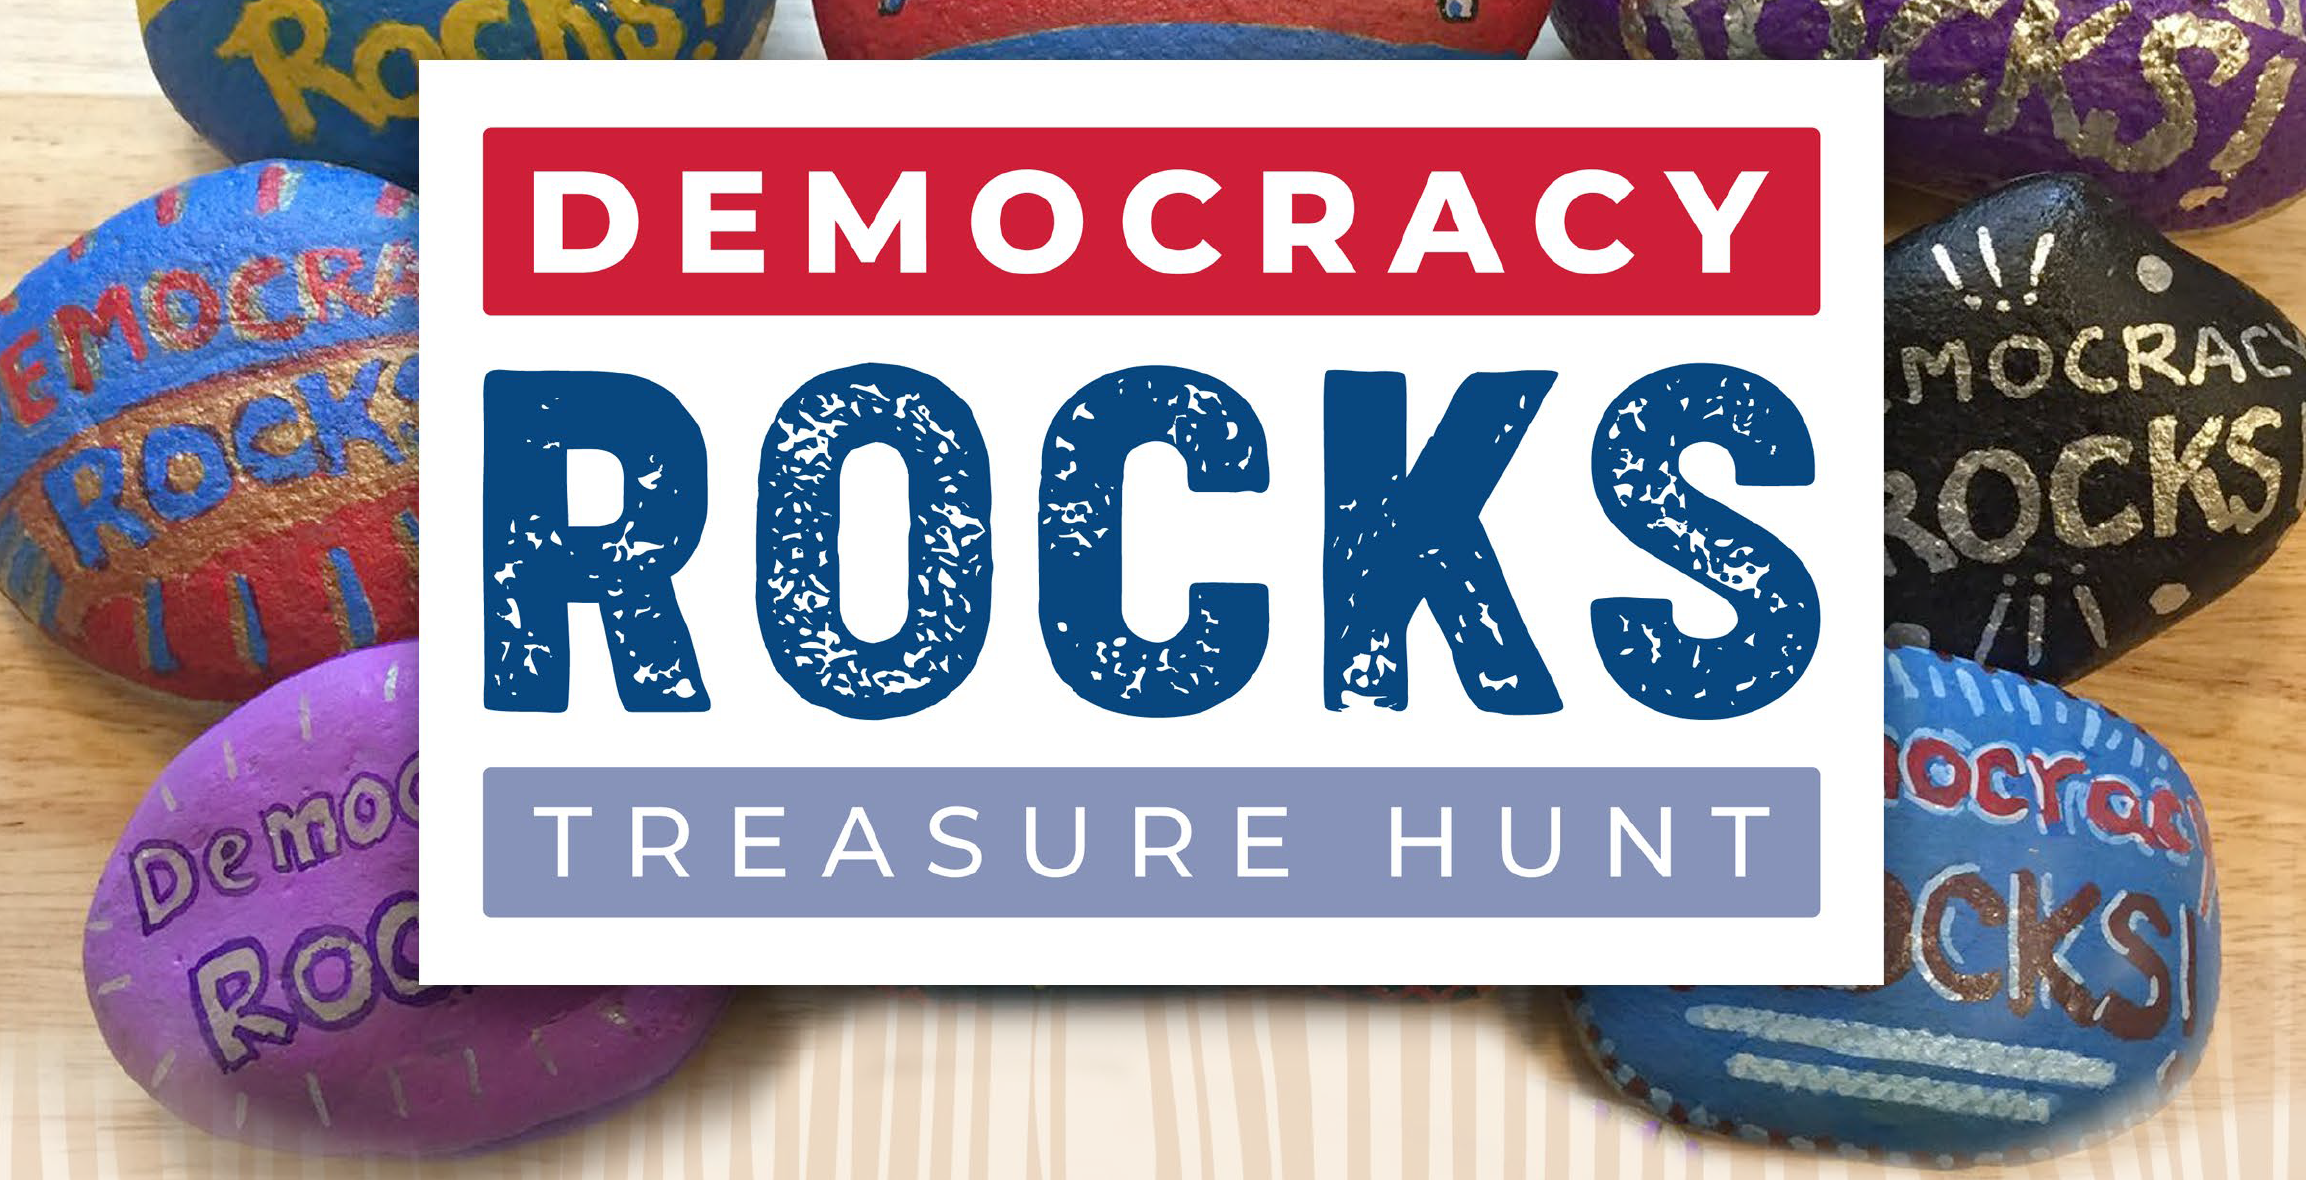 Democracy Rocks Treasure Hunt at Local Library